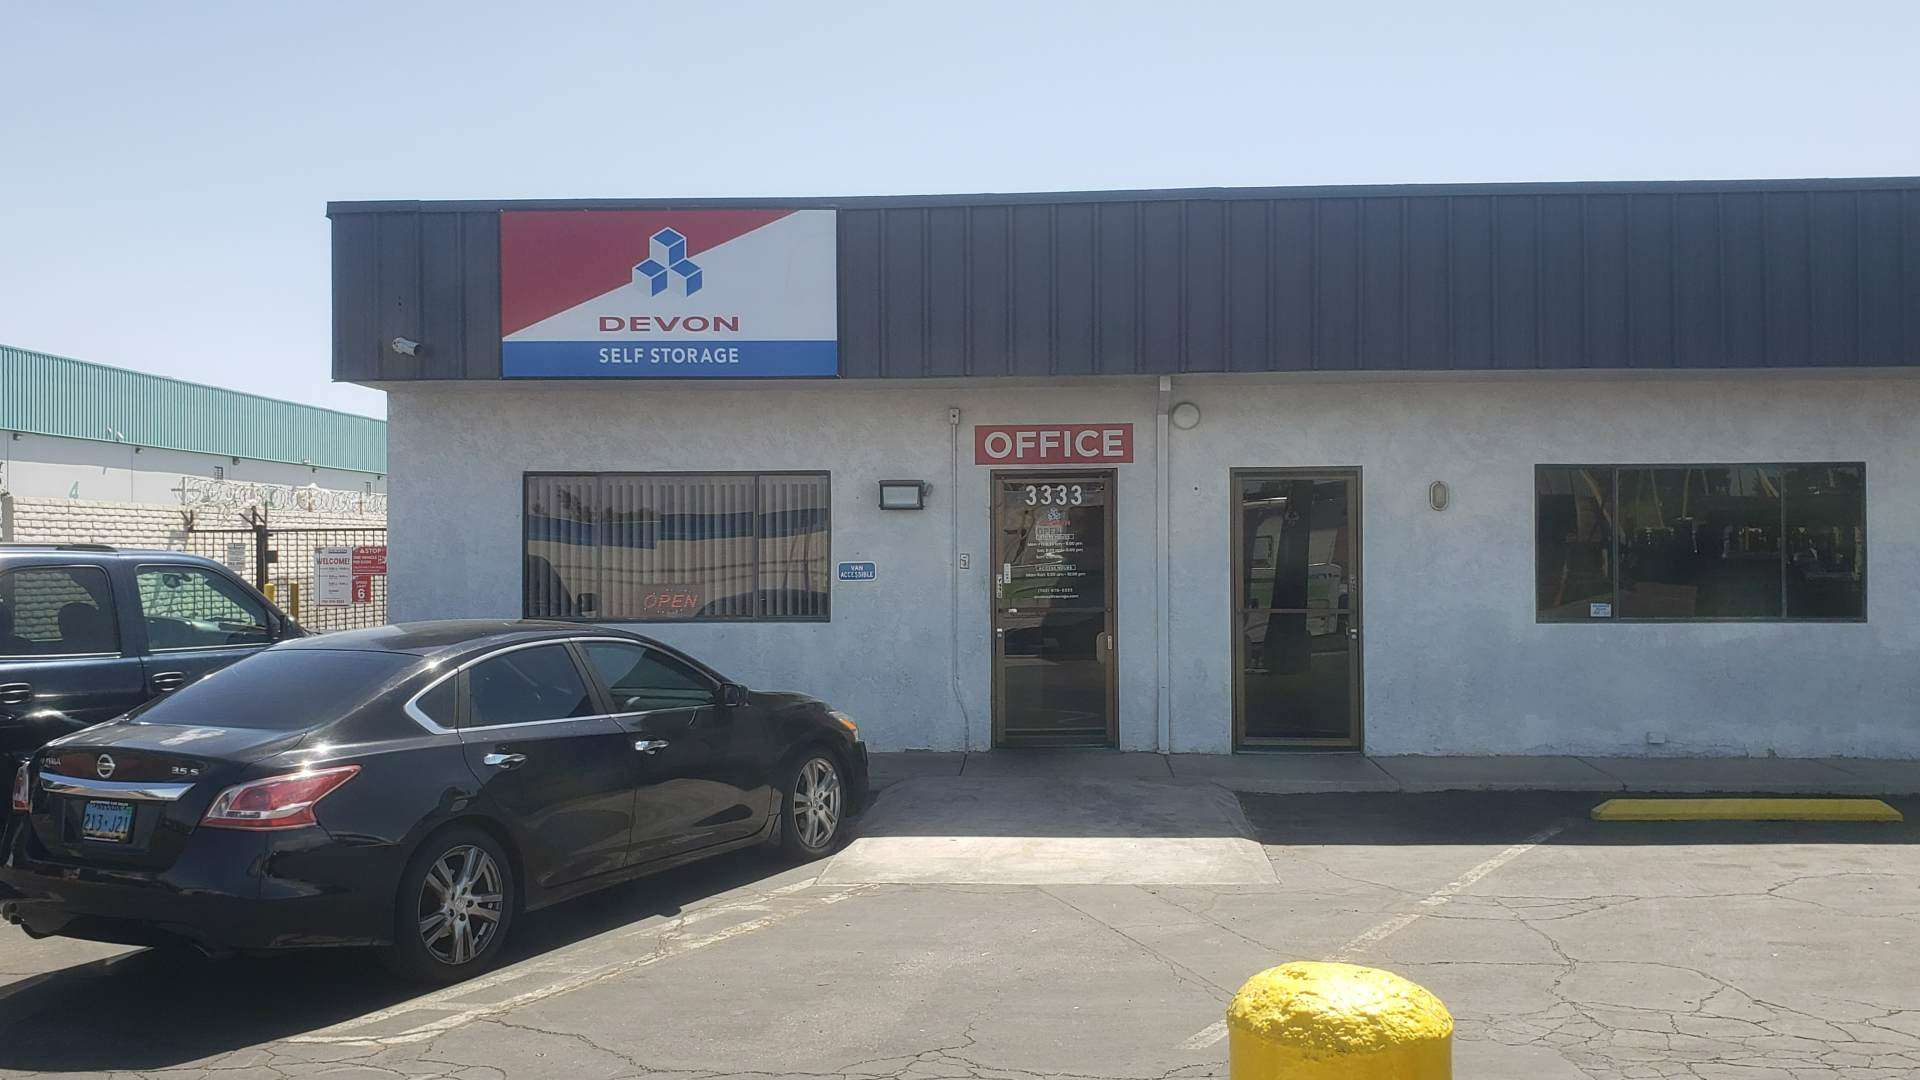 Office Entrance at Devon Self Storage in Las Vegas.